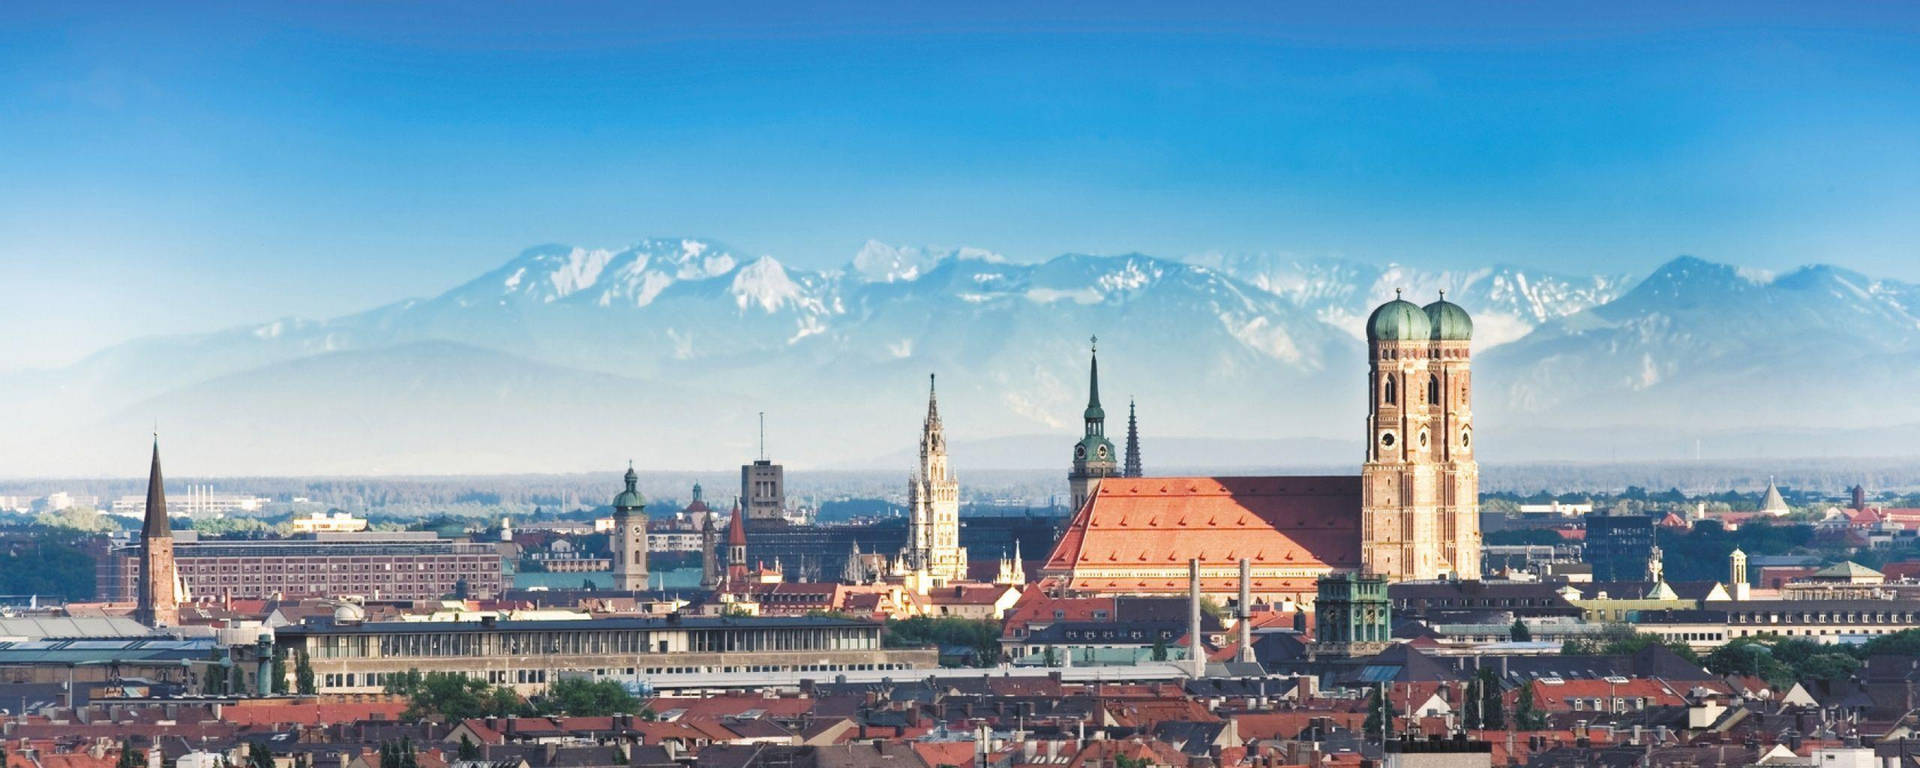 Widescreen Munich City Picture